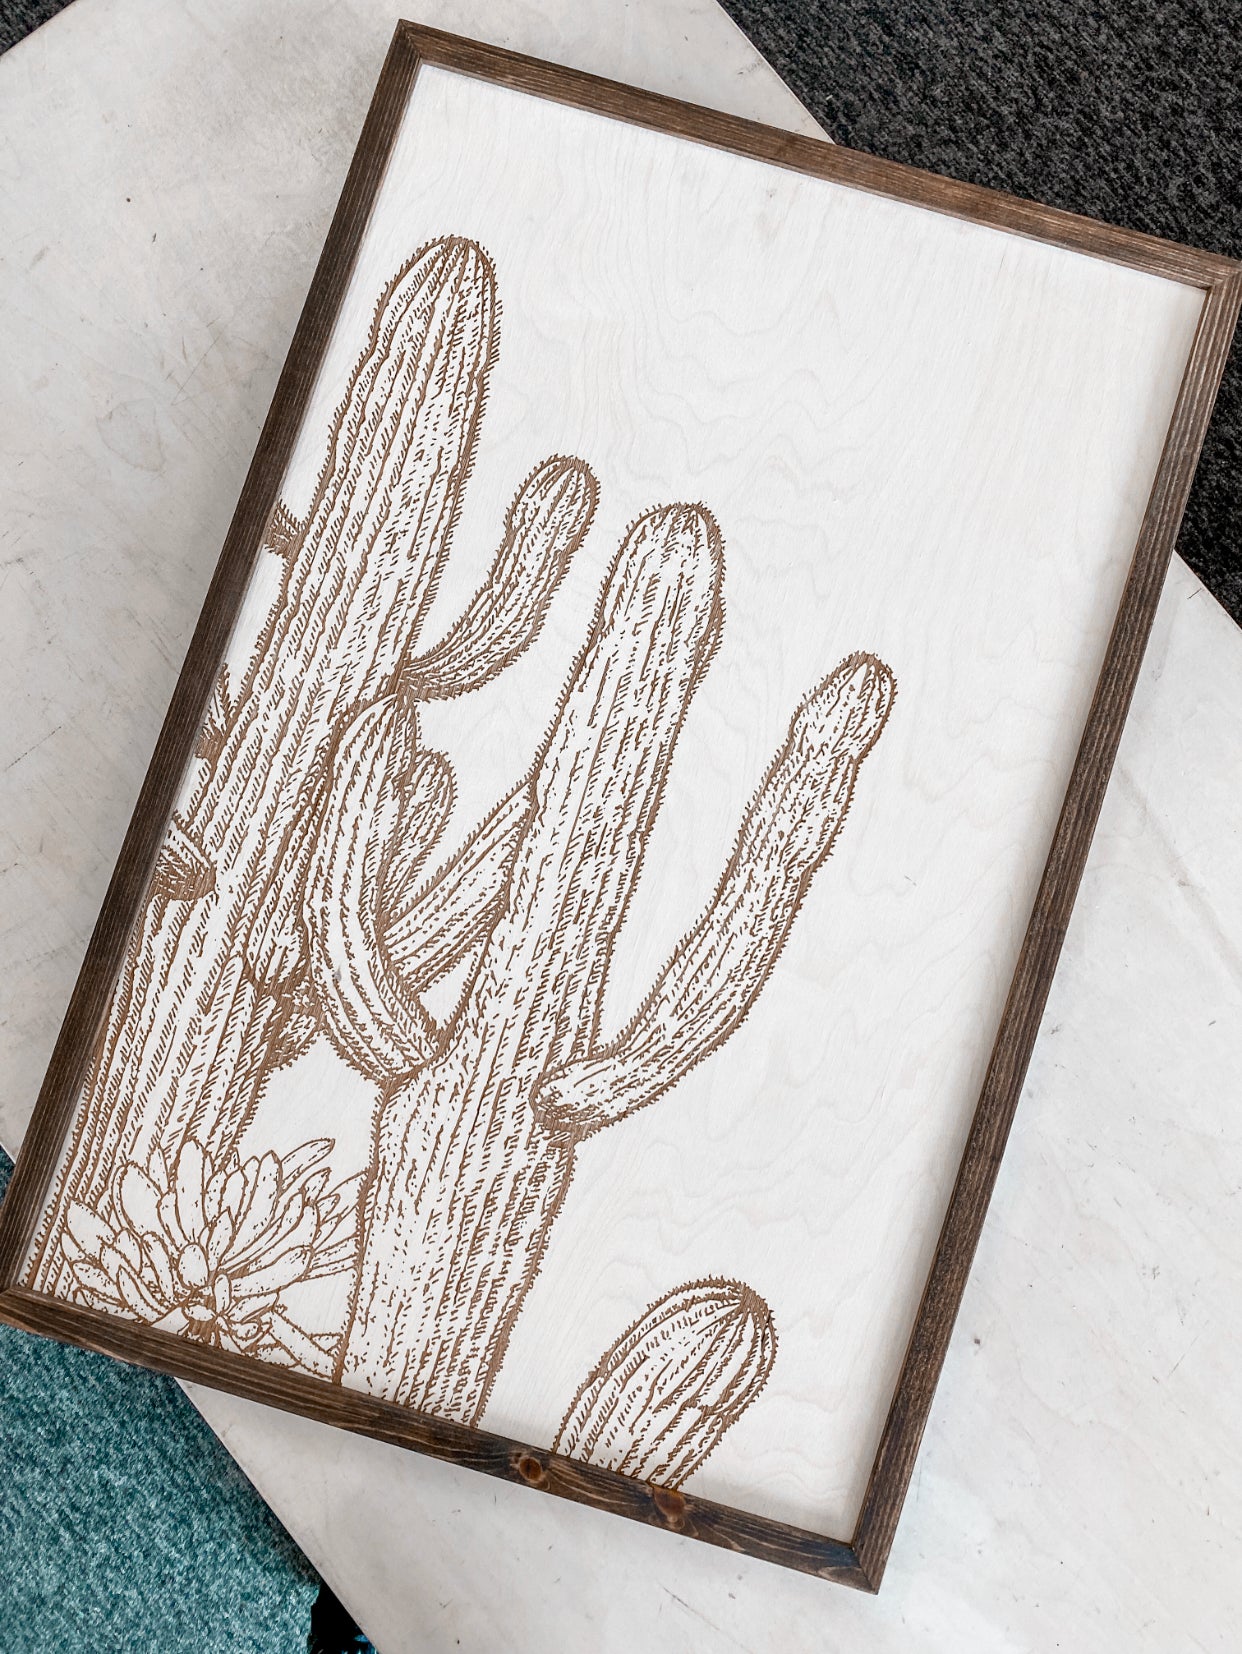 Cactus Wooden Artwork